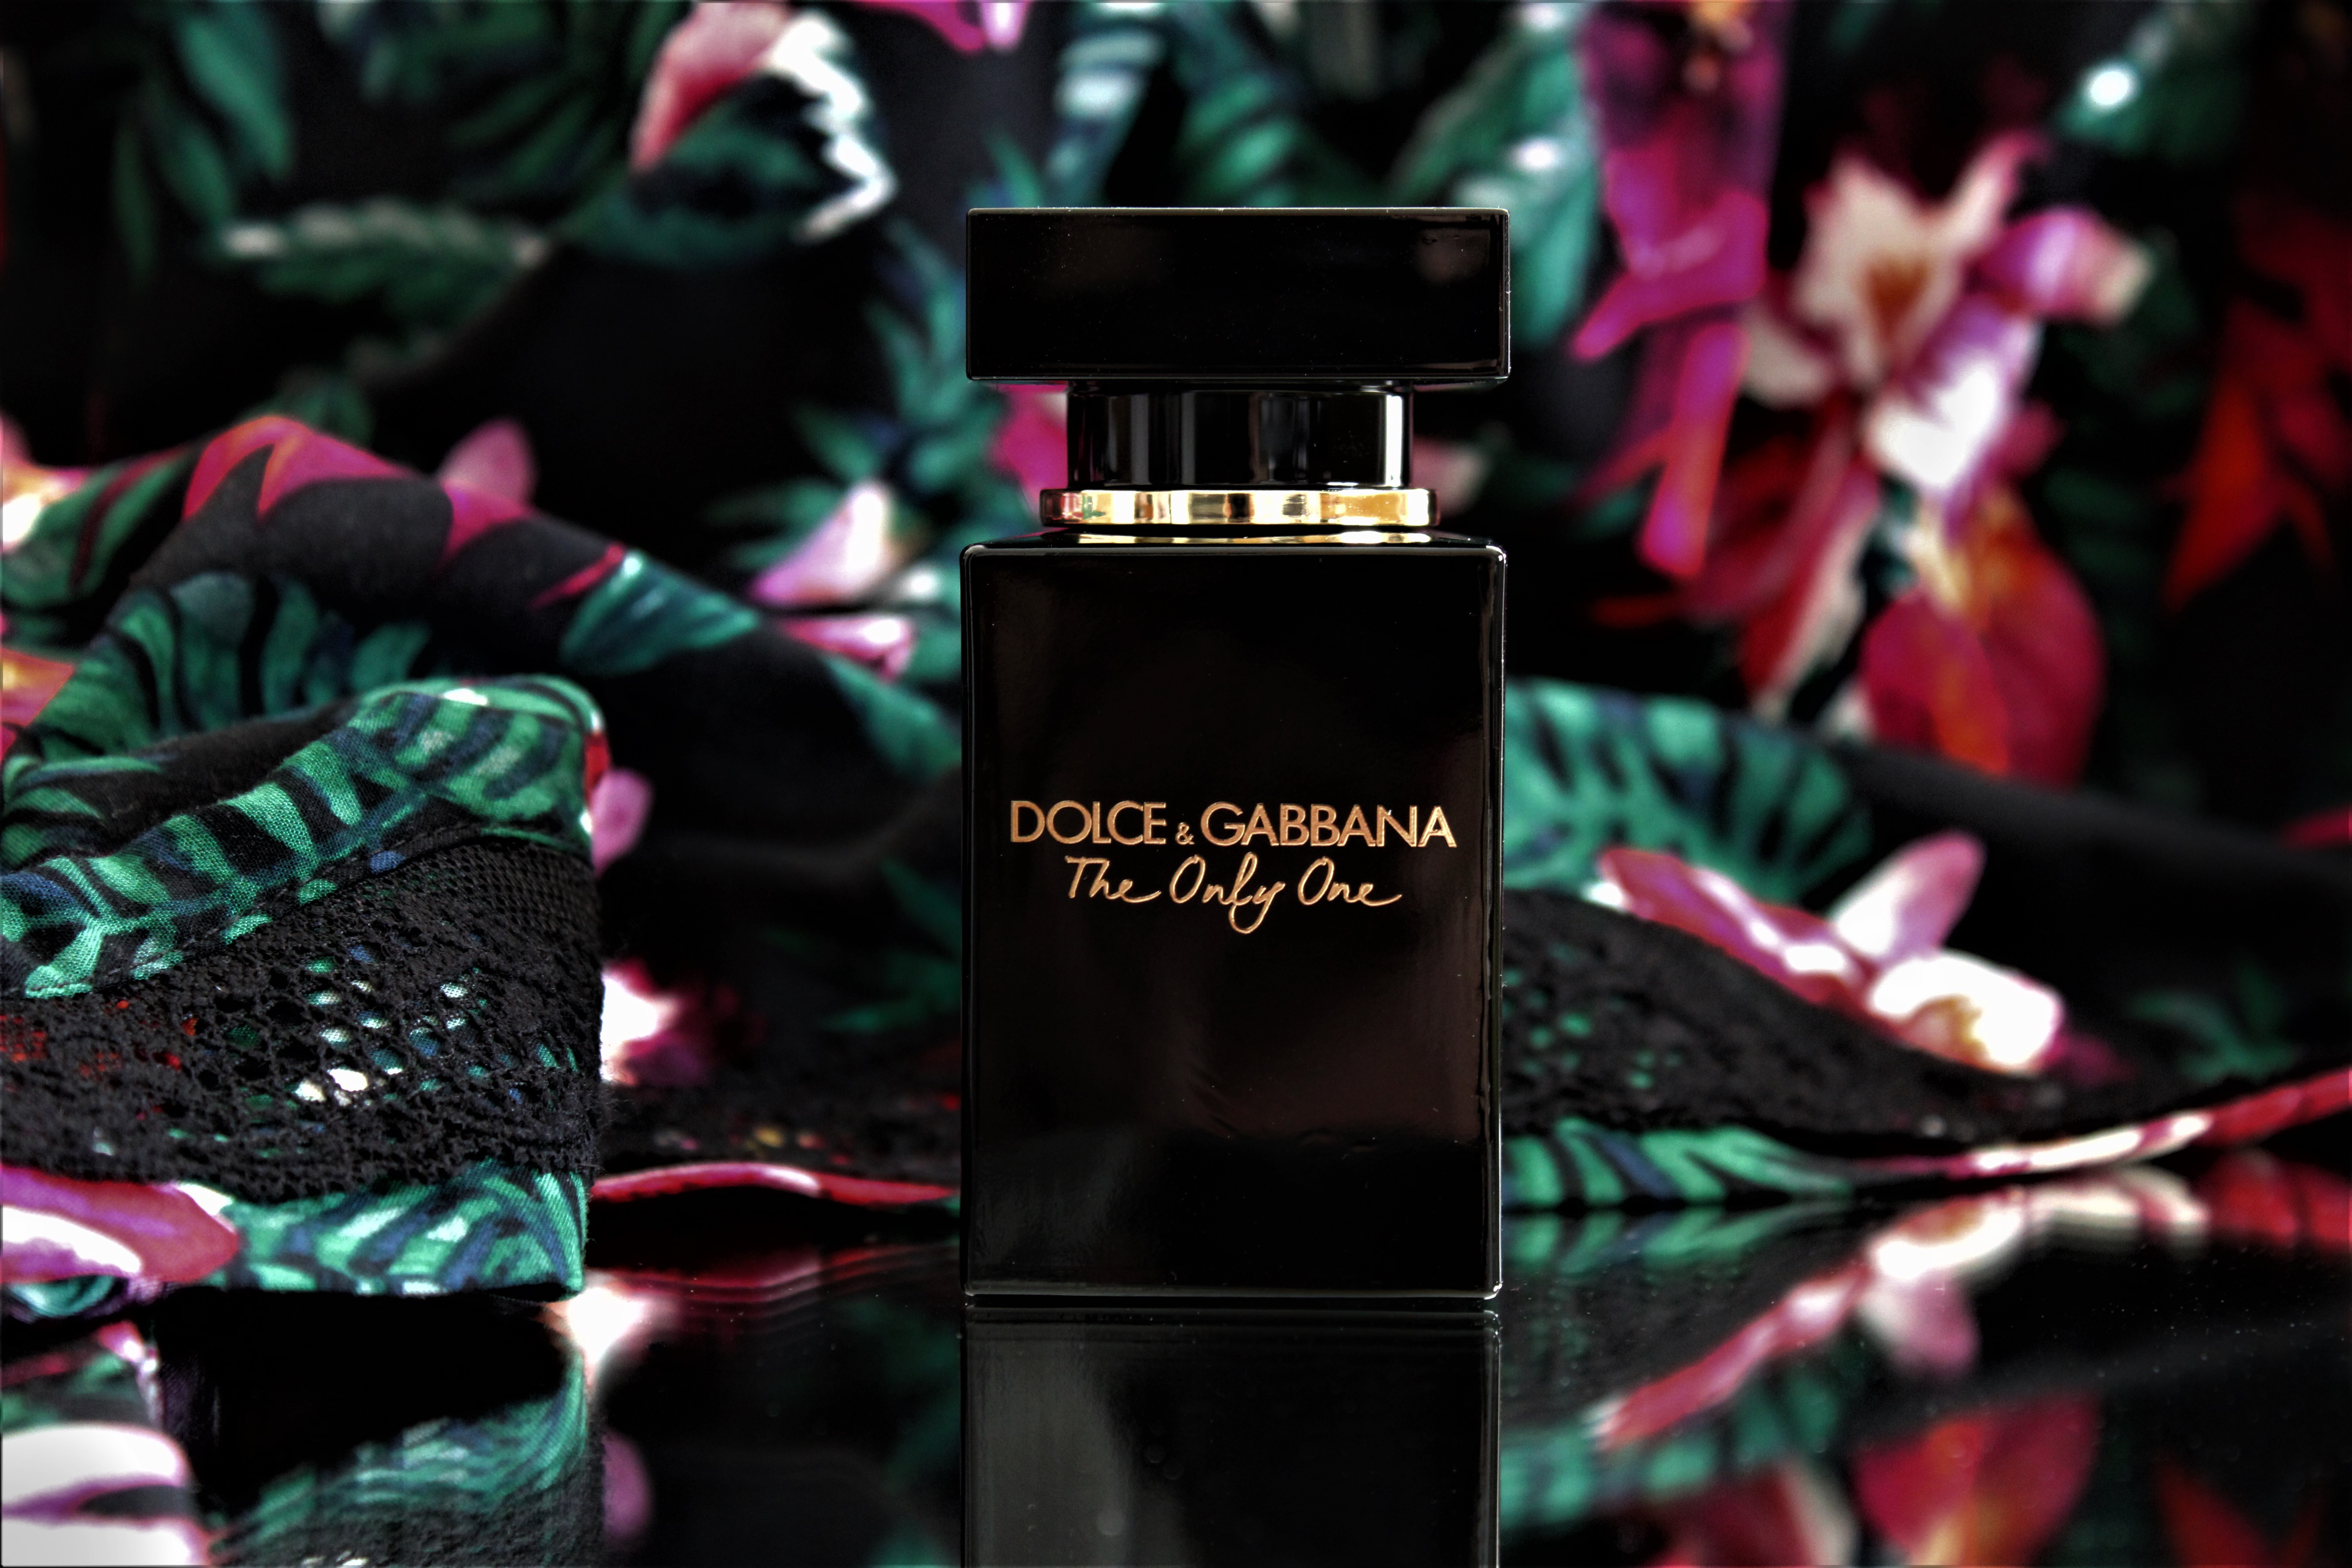 Дольче габбана intense. Dolce Gabbana the only one EDP intense. The only one Eau de Parfum intense Dolce&Gabbana. Dolce Gabbana intense. Дольче Габбана Парфюм Интенс женские.